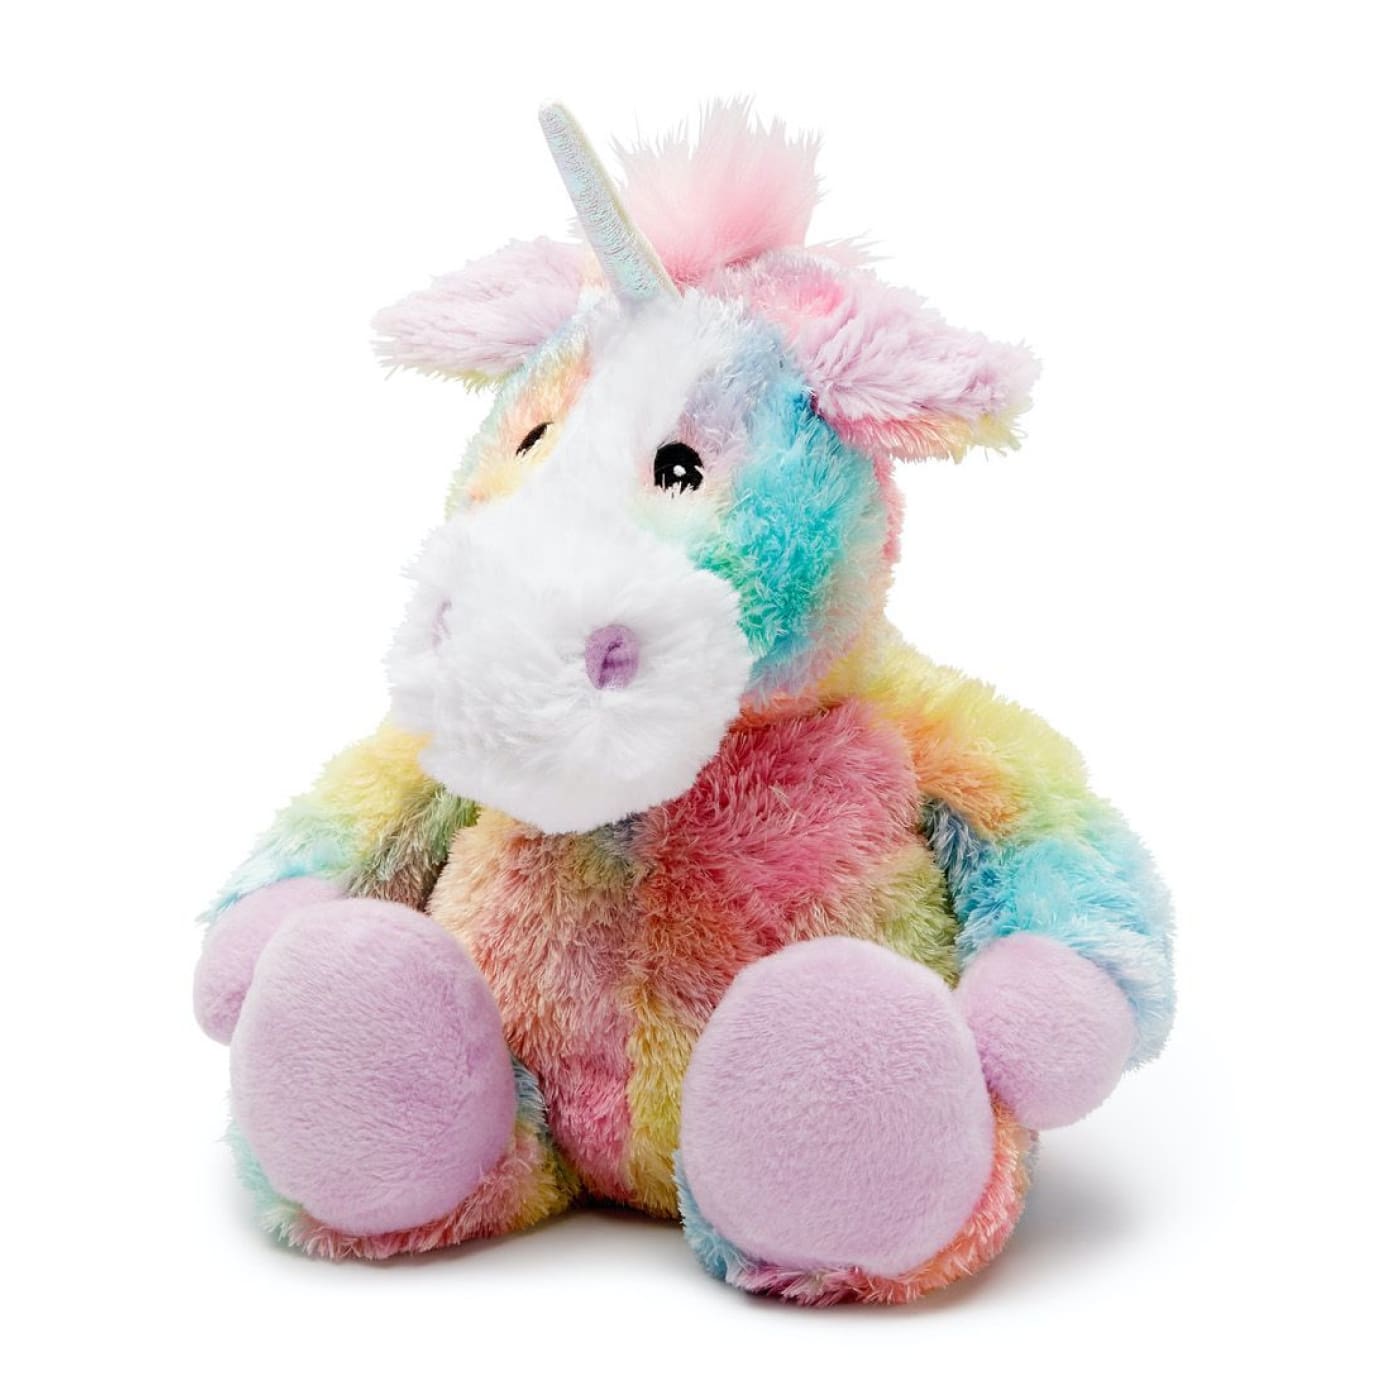 Warmies Cozy Plush - Rainbow Unicorn - Unicorn - HEALTH & HOME SAFETY - THERMOMETERS/MEDICINAL